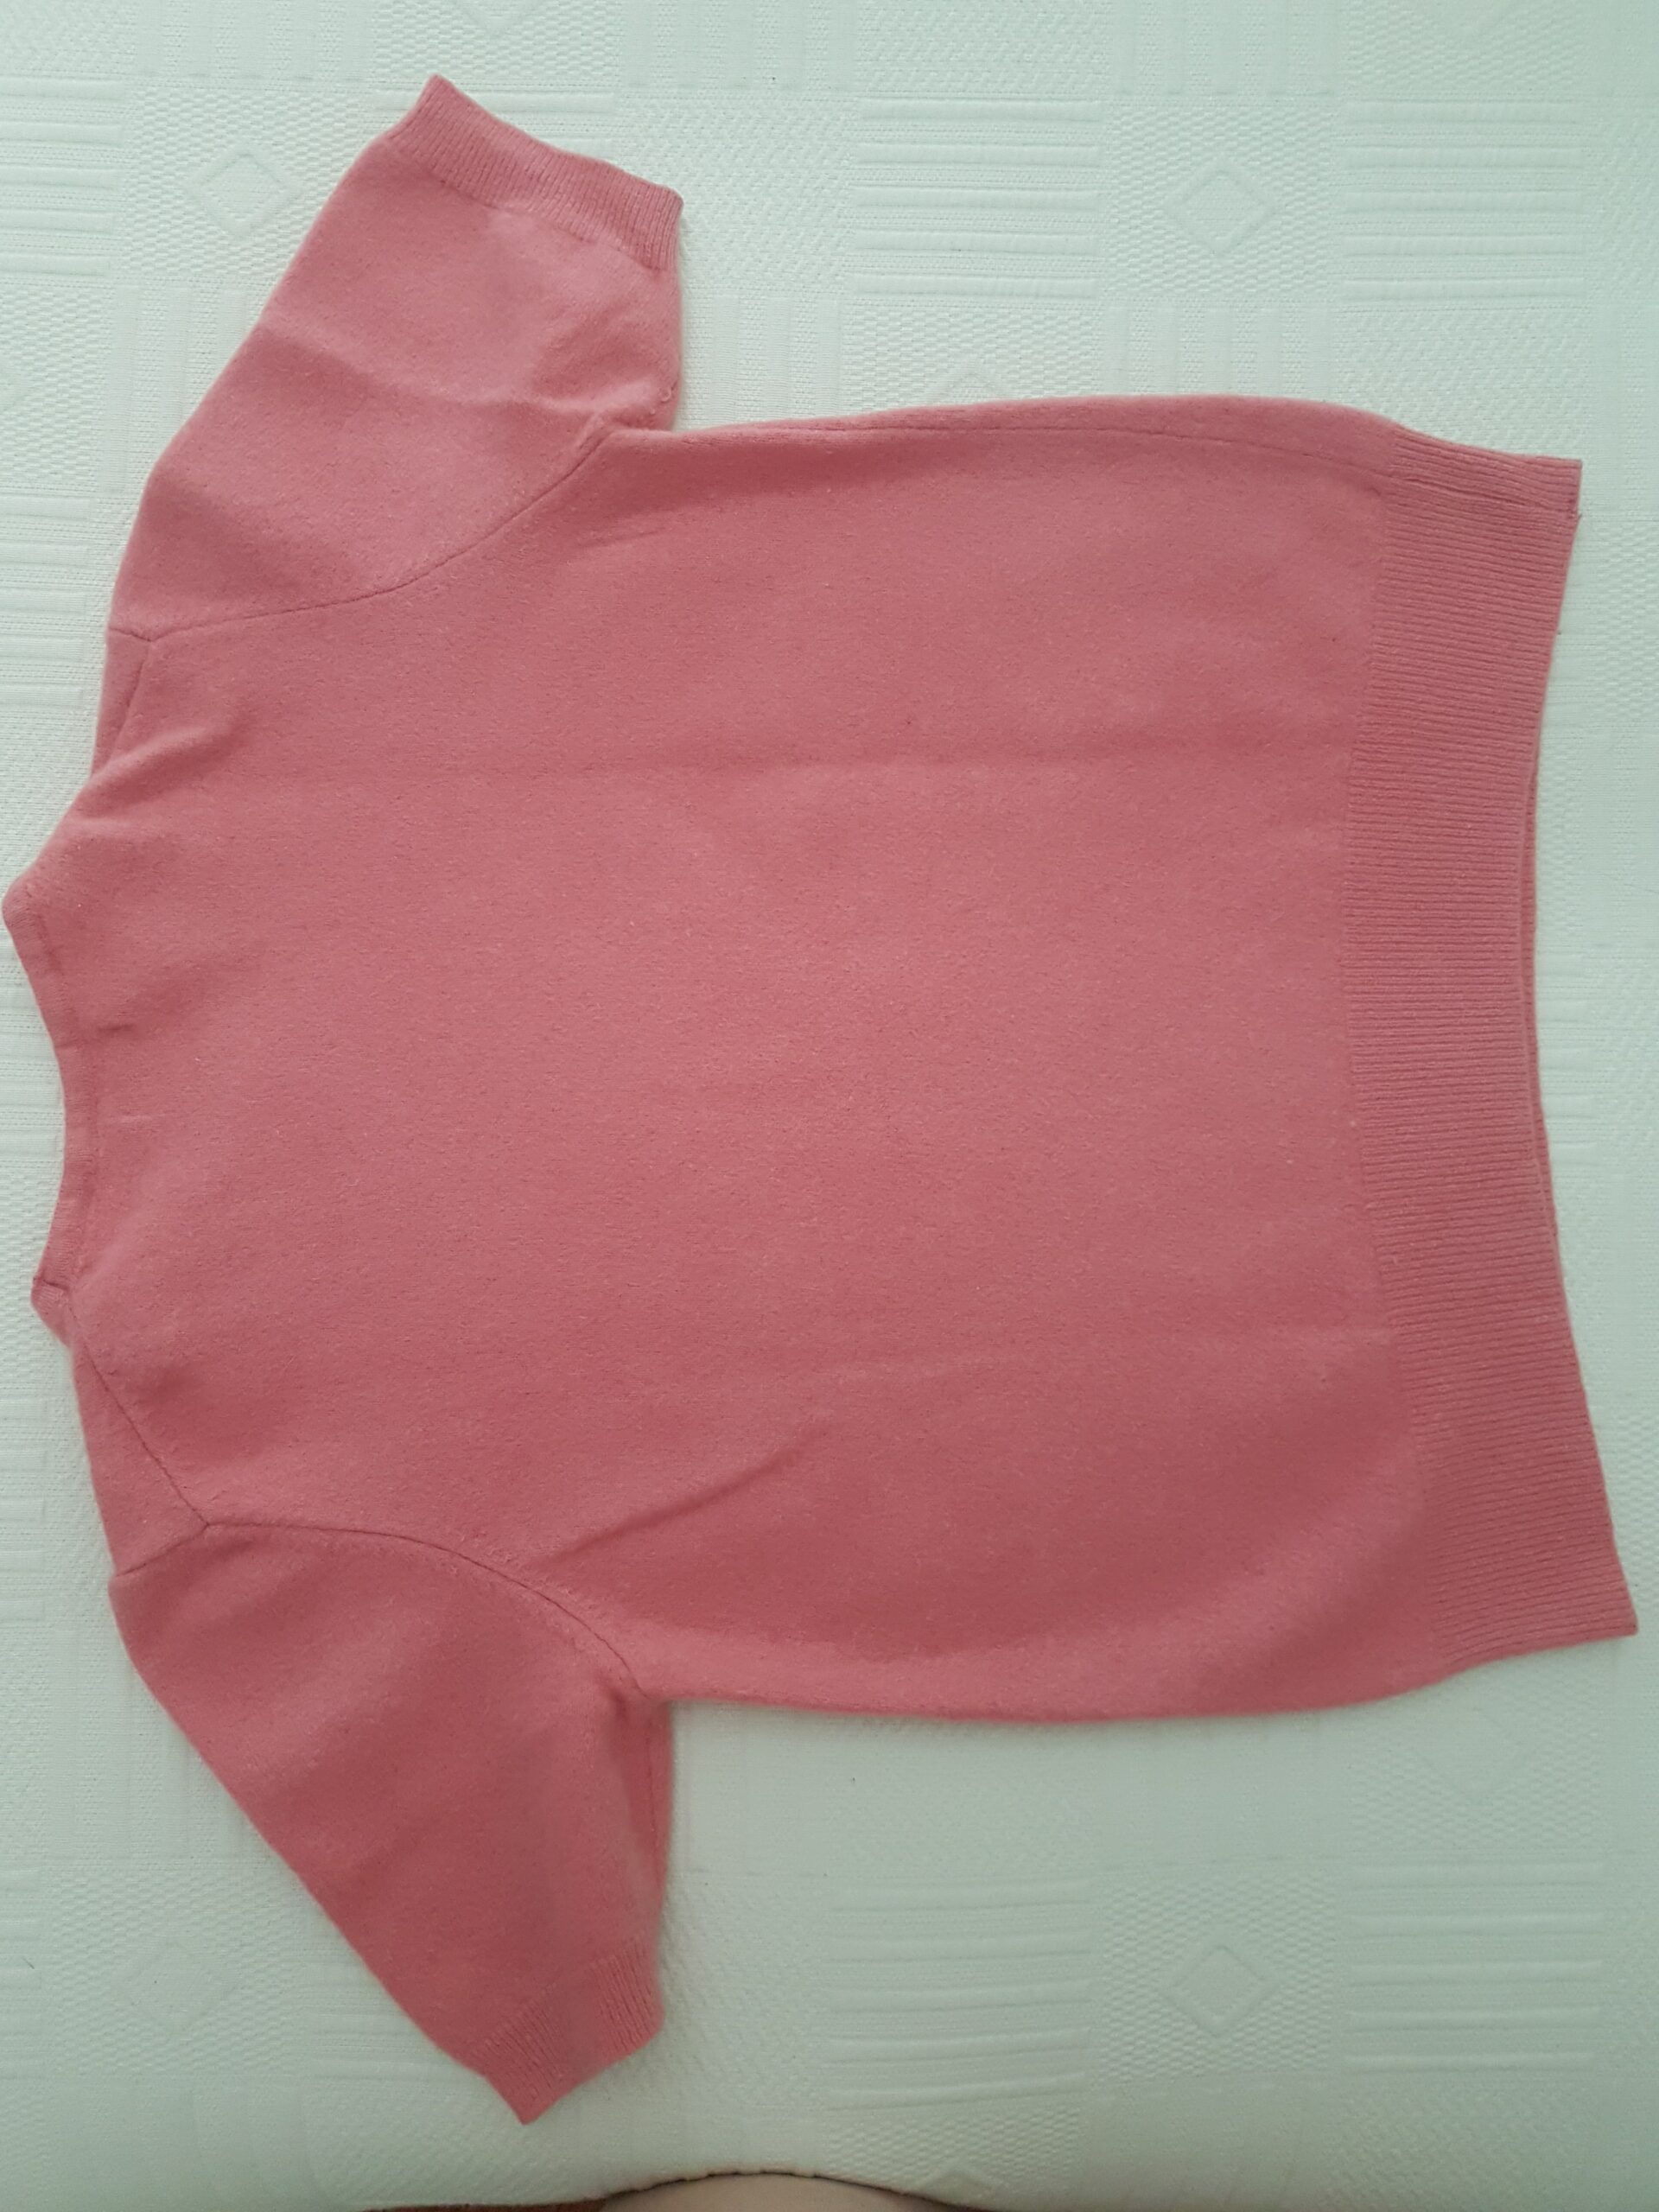 T-shirt Rosa, marca benetton, tamanho S 2